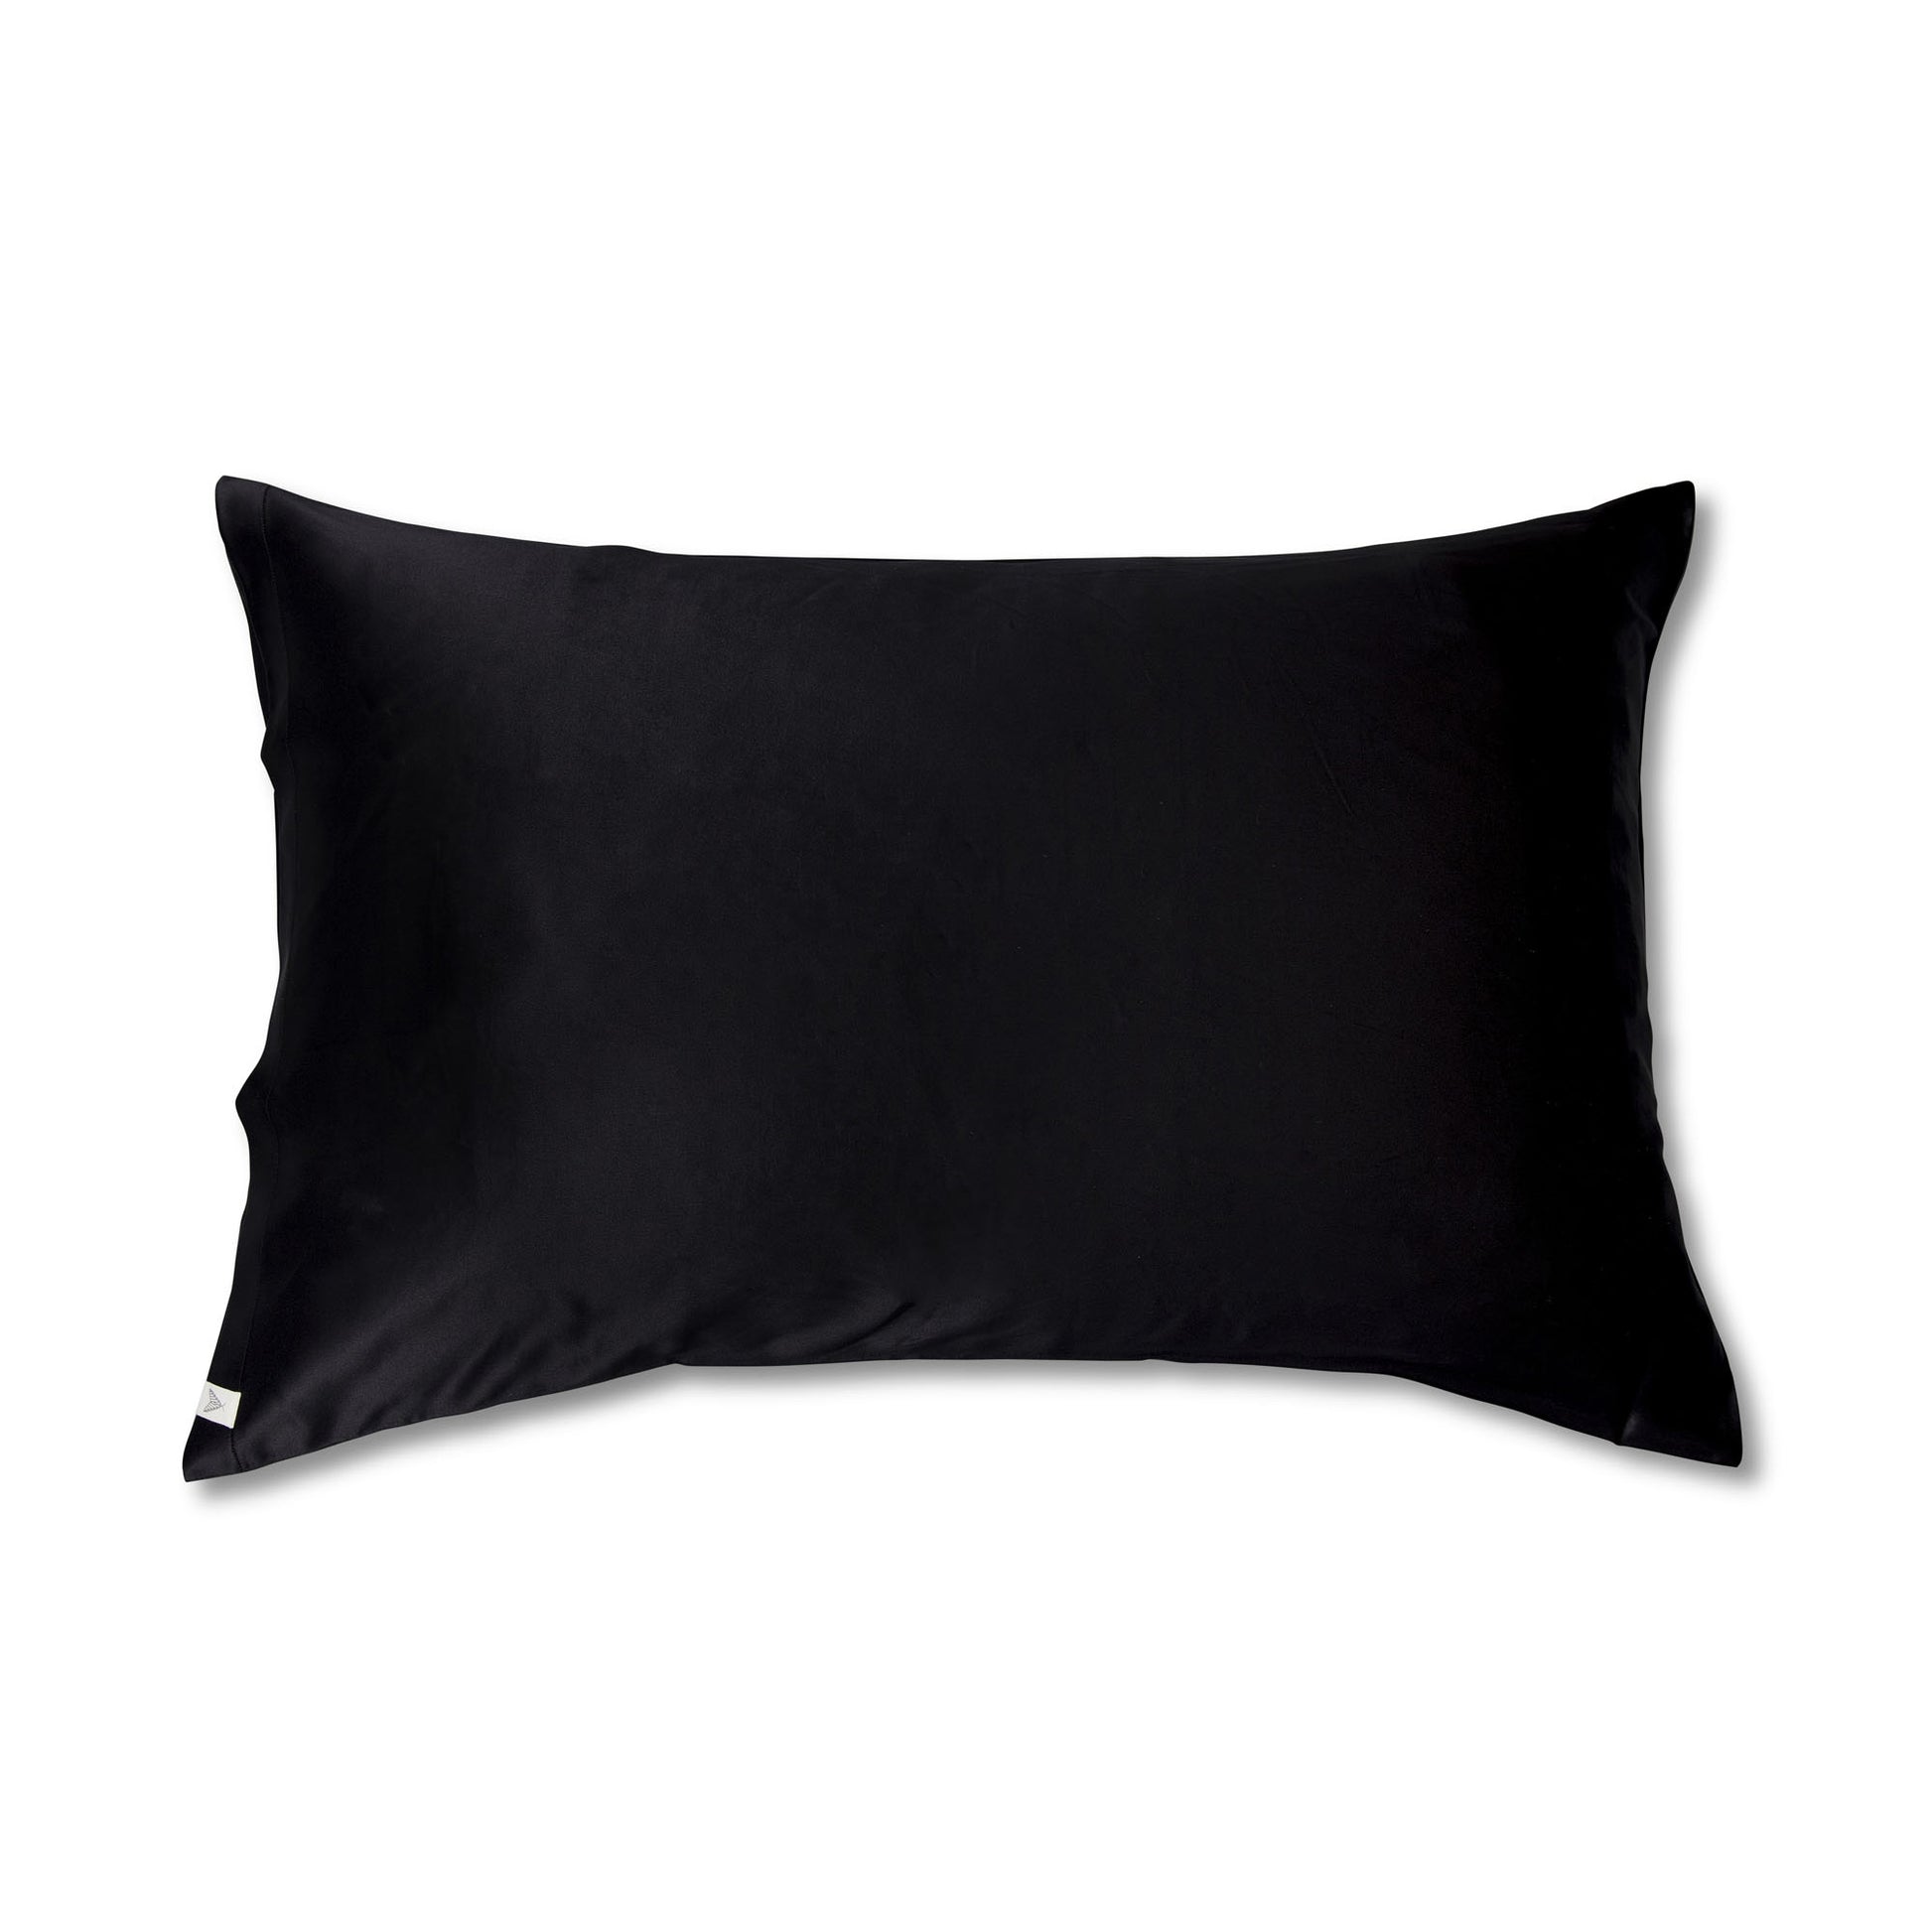 Black ethical peace silk pillowcase, standard size